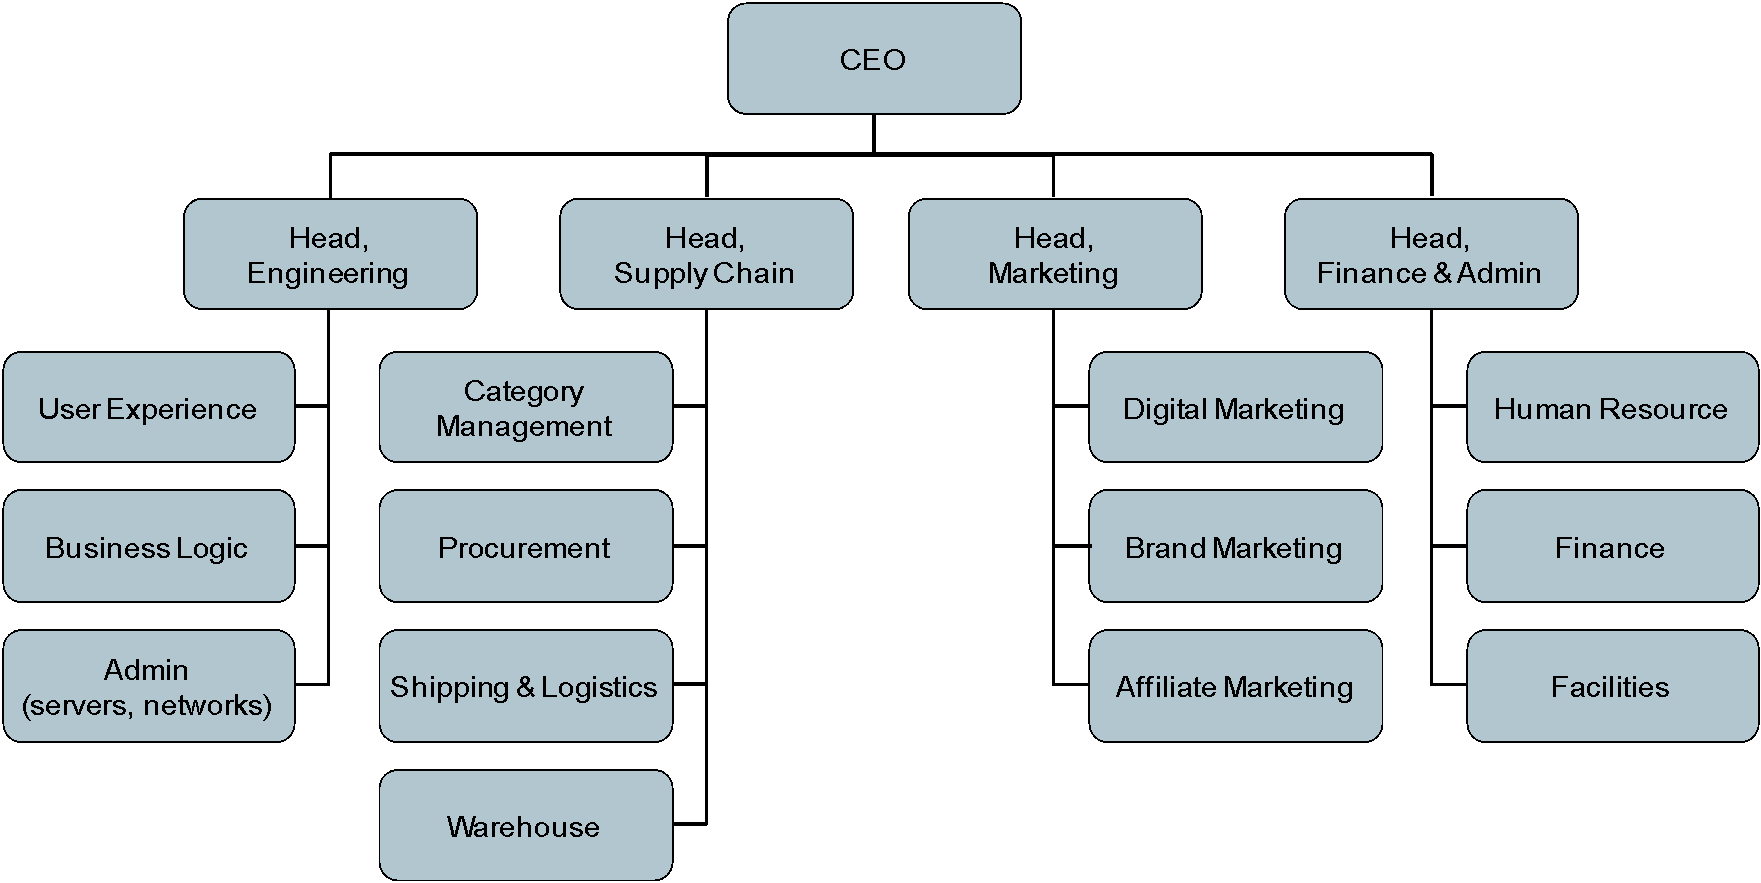 Organization Overview